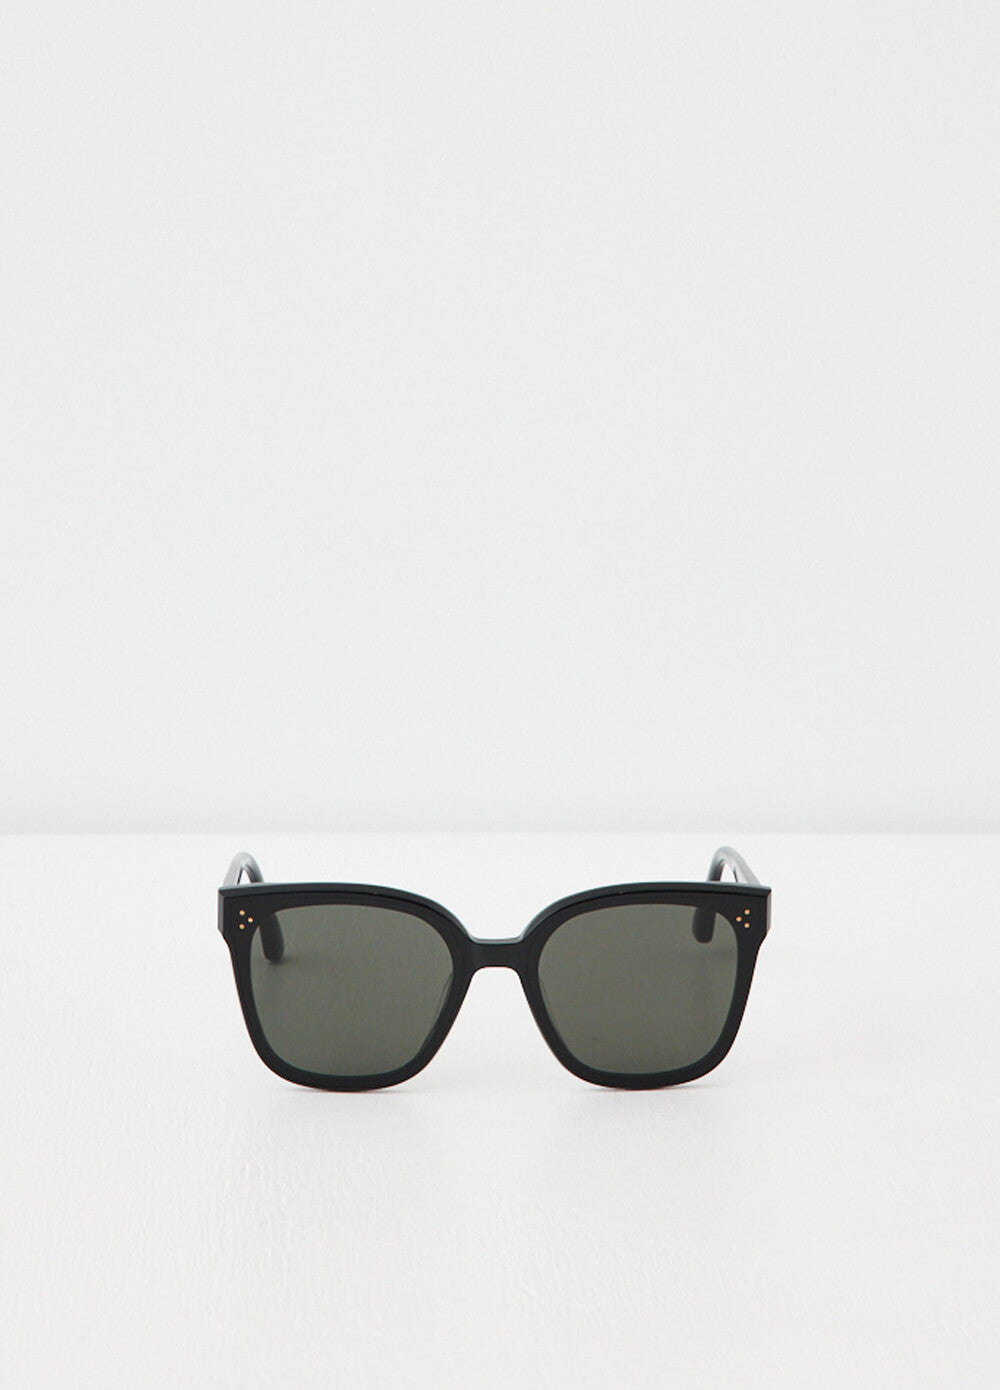 Rick 01 Sunglasses